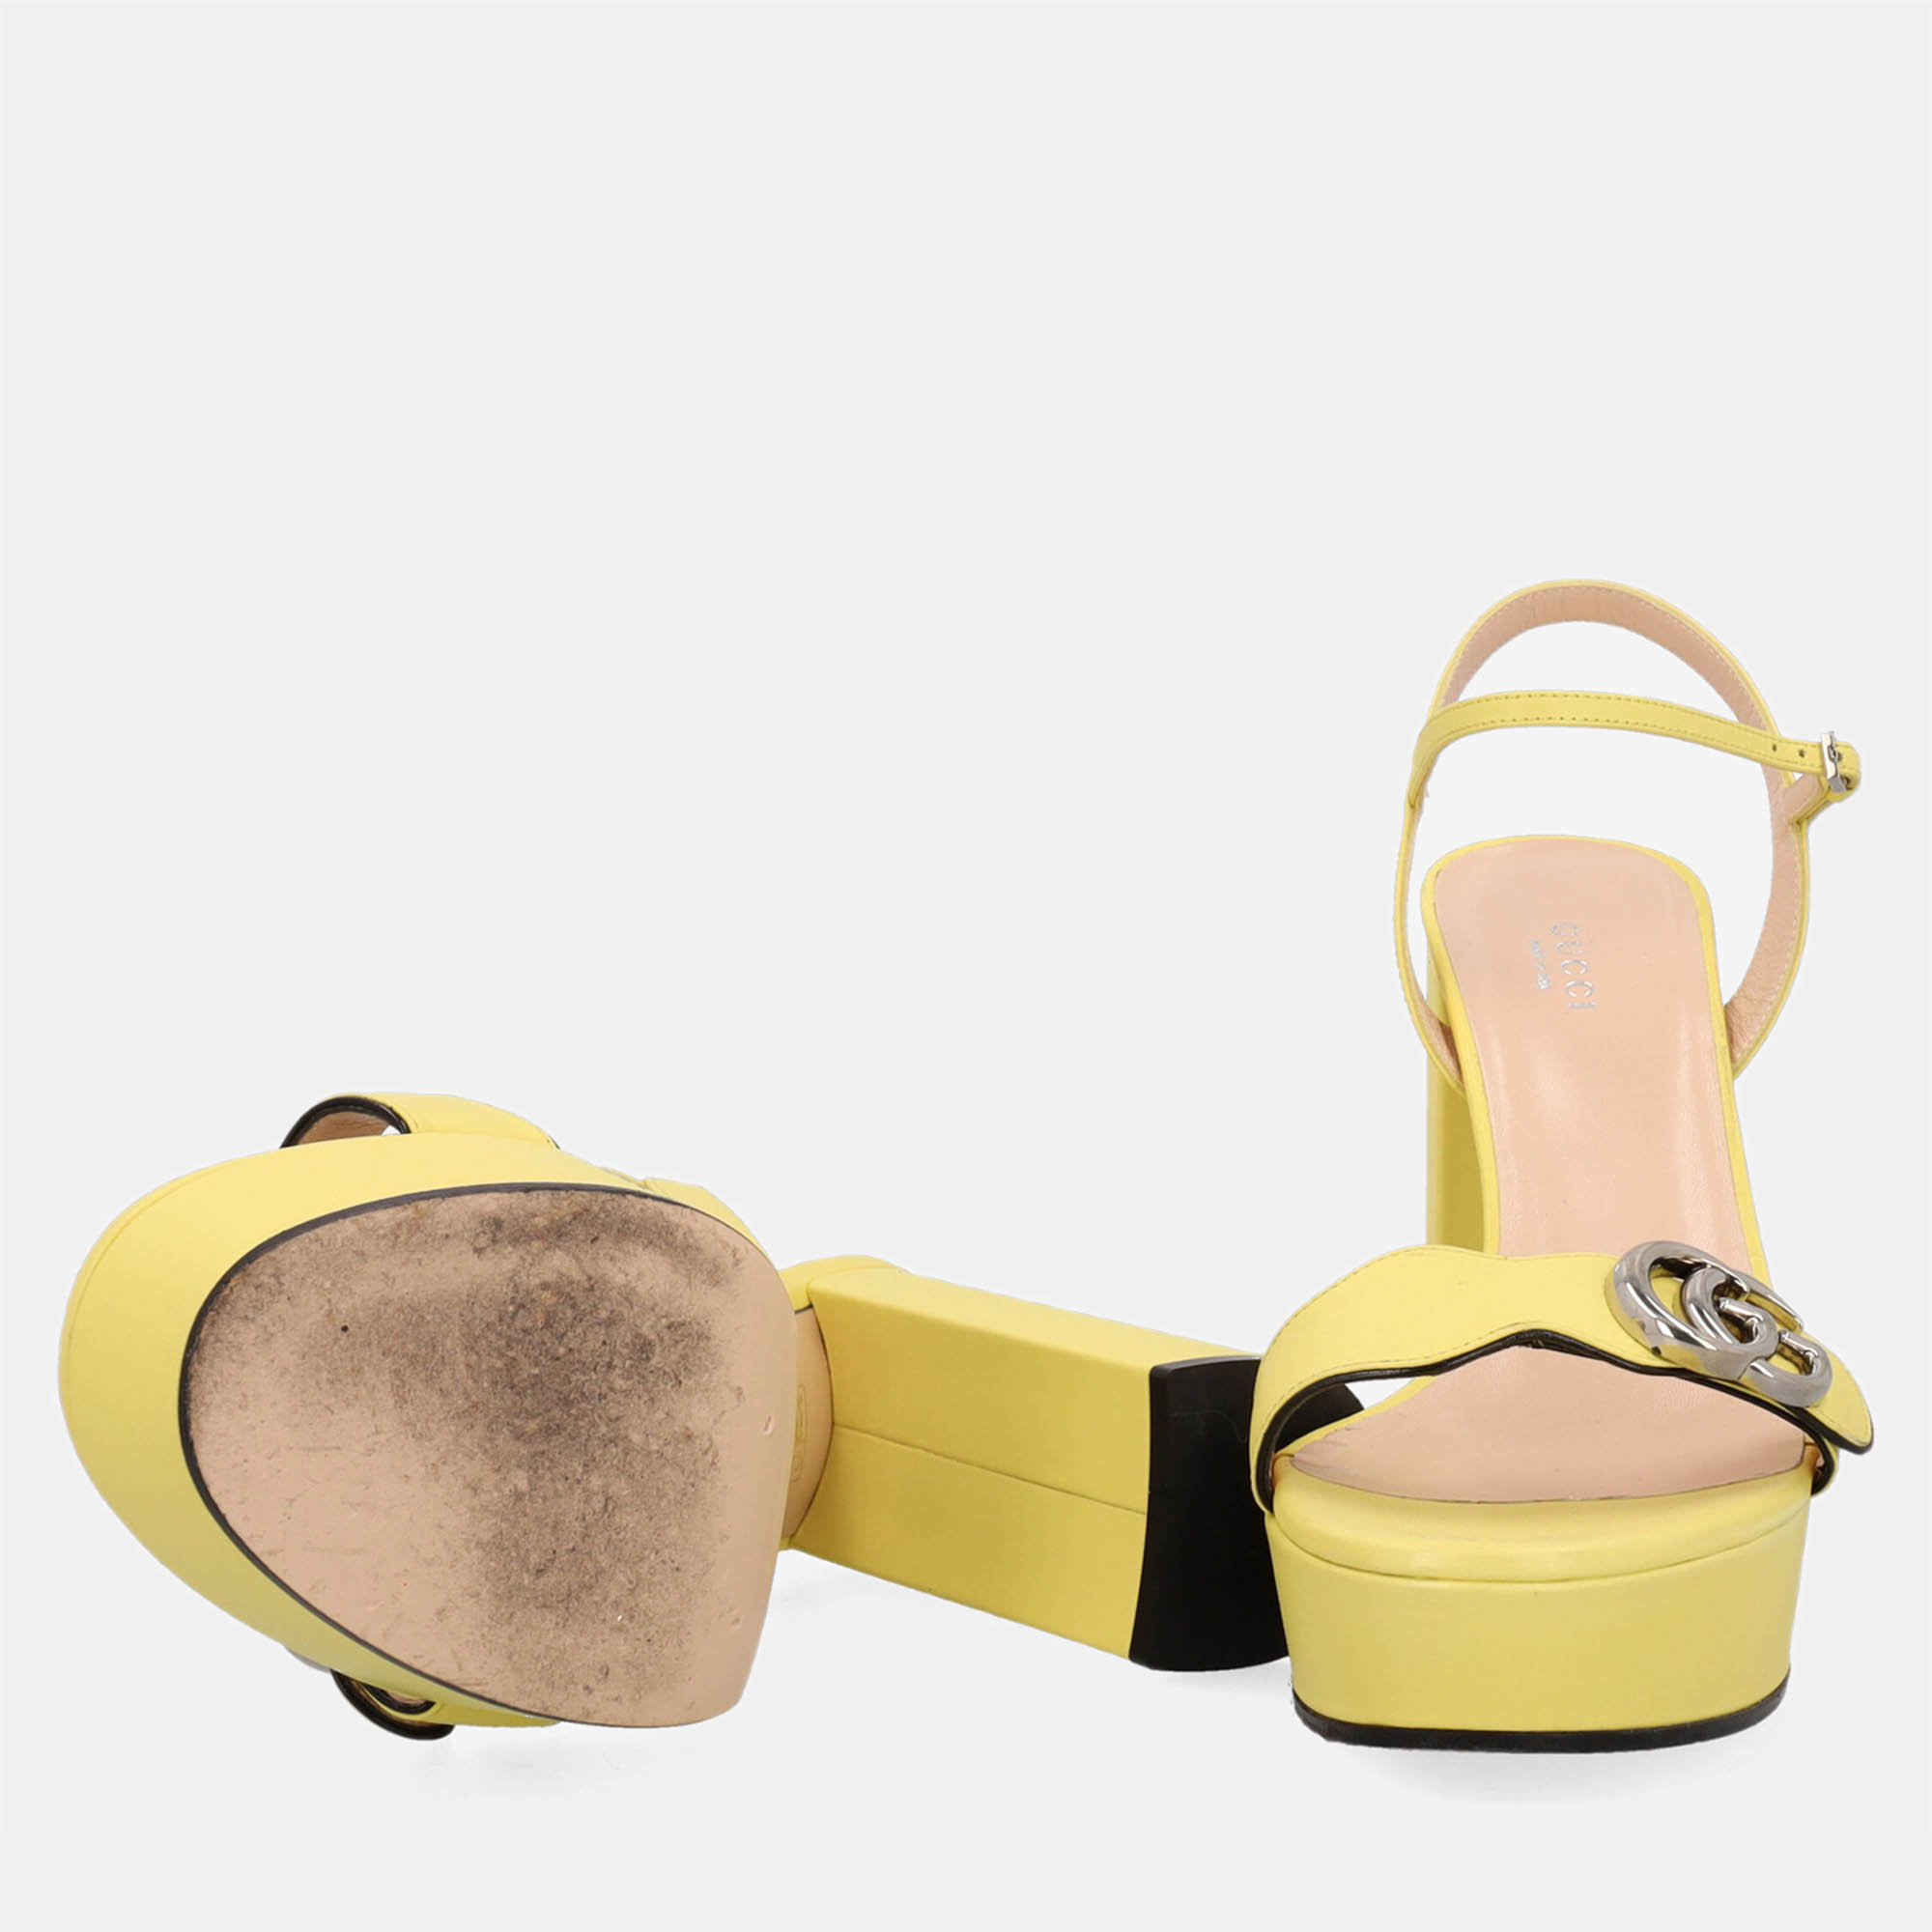 Gucci  Women's Leather Sandals - Yellow - EU 40